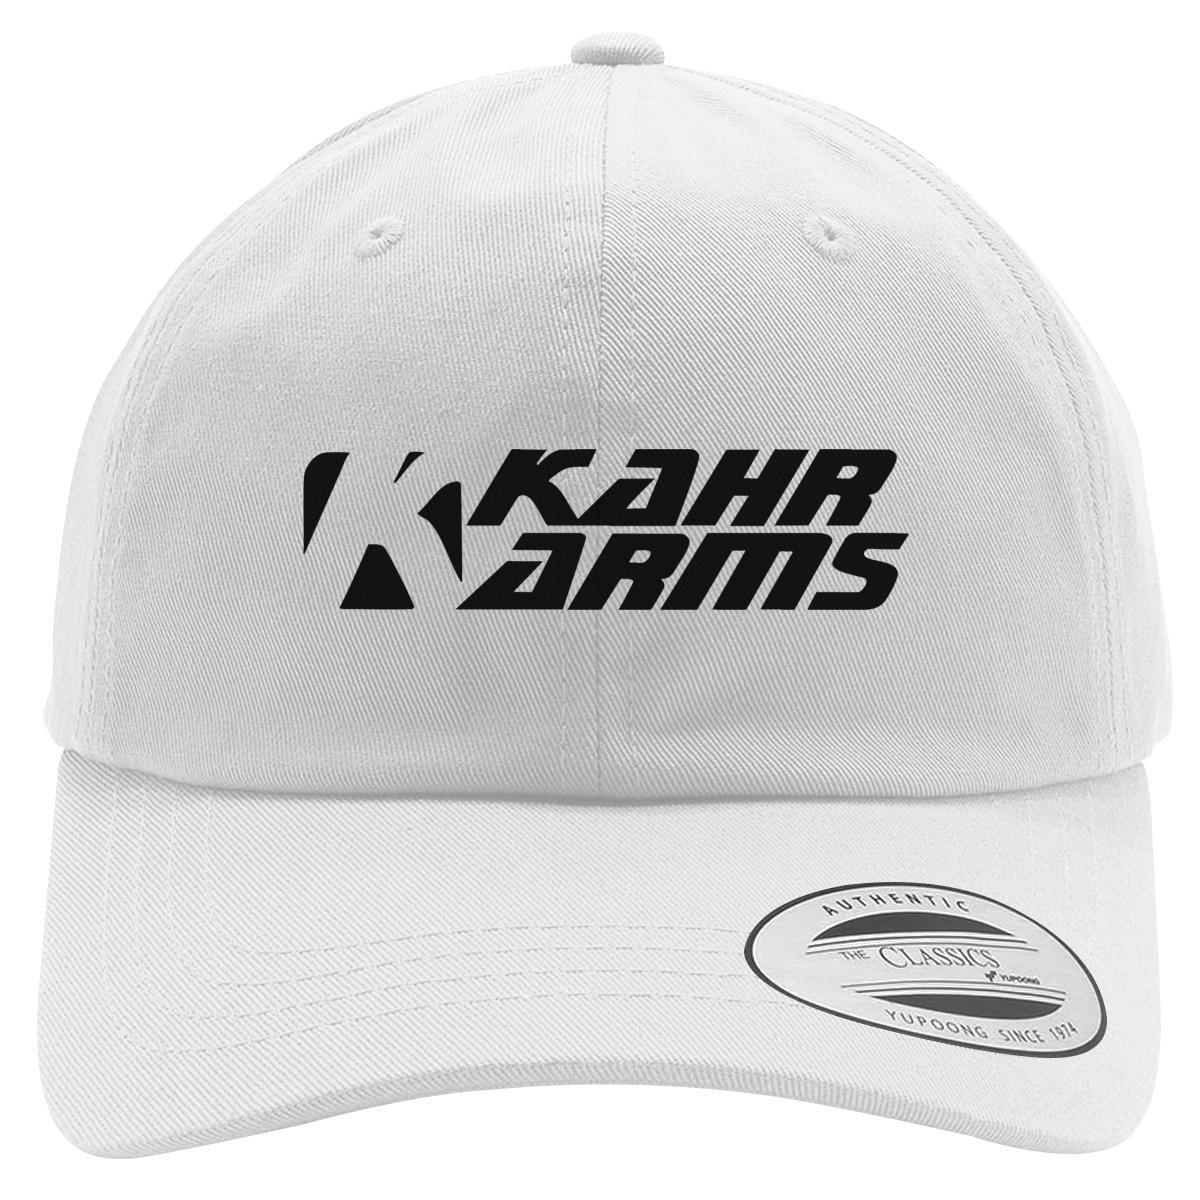 Kahr Logo - Kahr Arms Logo Cotton Twill Hat